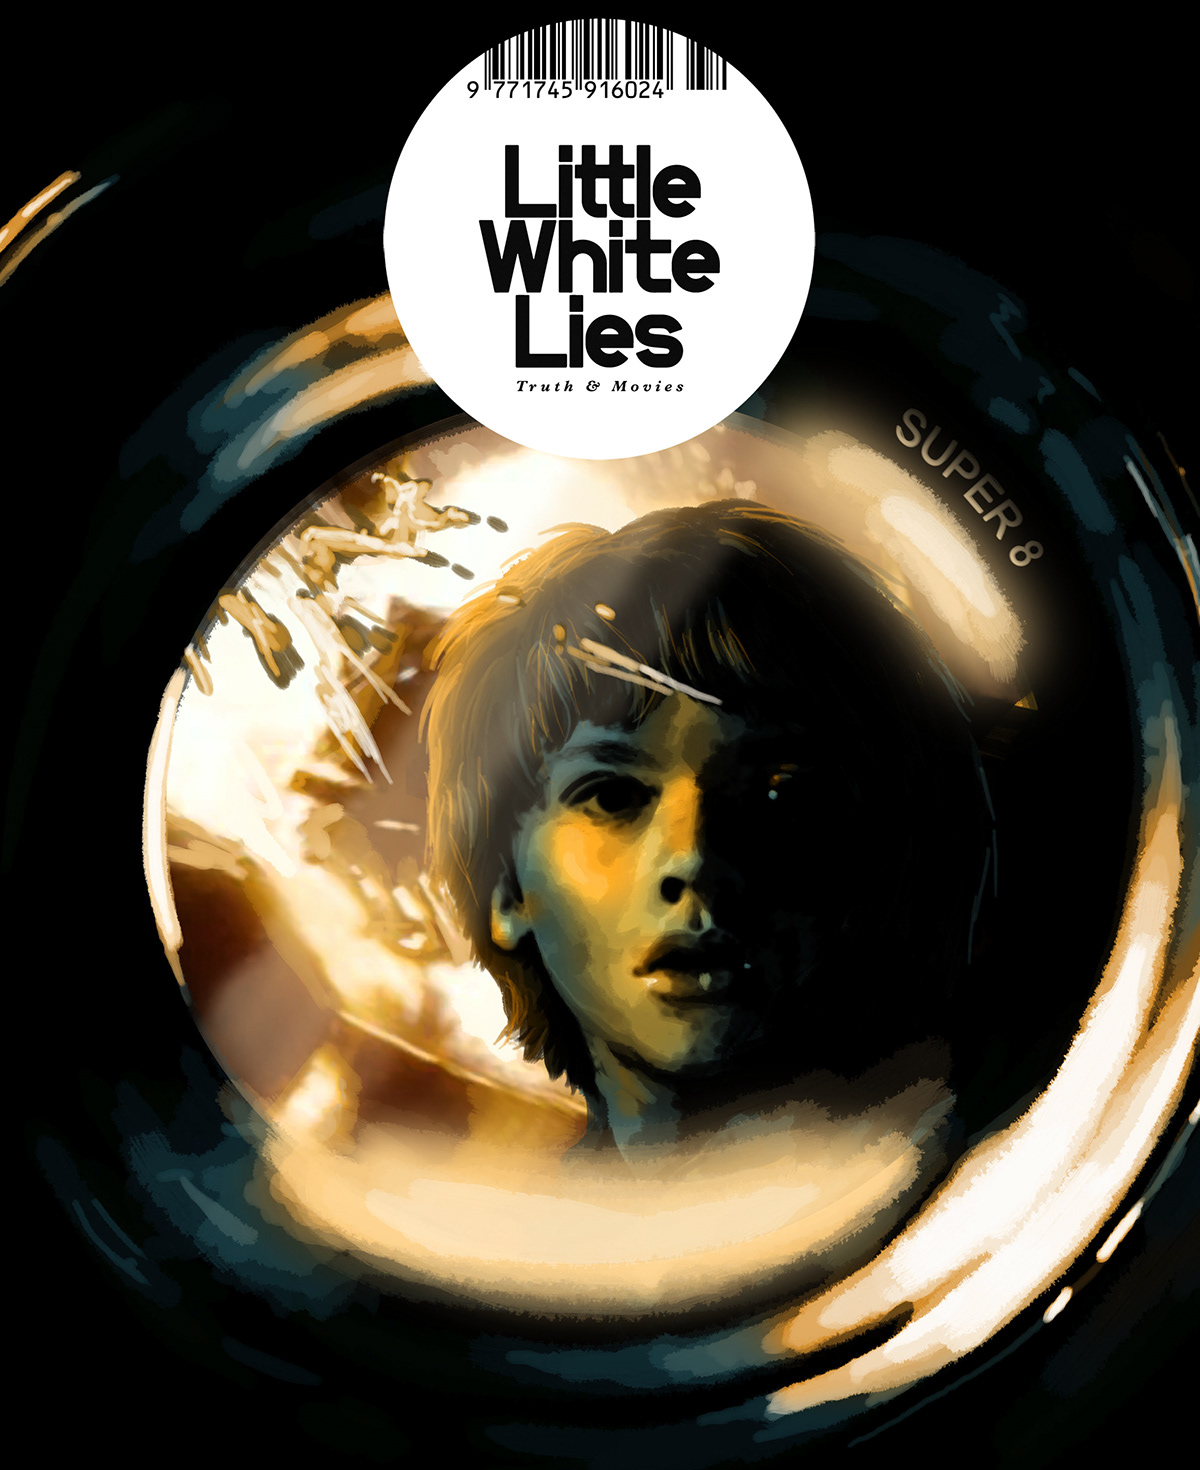 Little White Lies cover tree of life super8 Sean Penn Joel Courtney Hunter McCracken D&AD